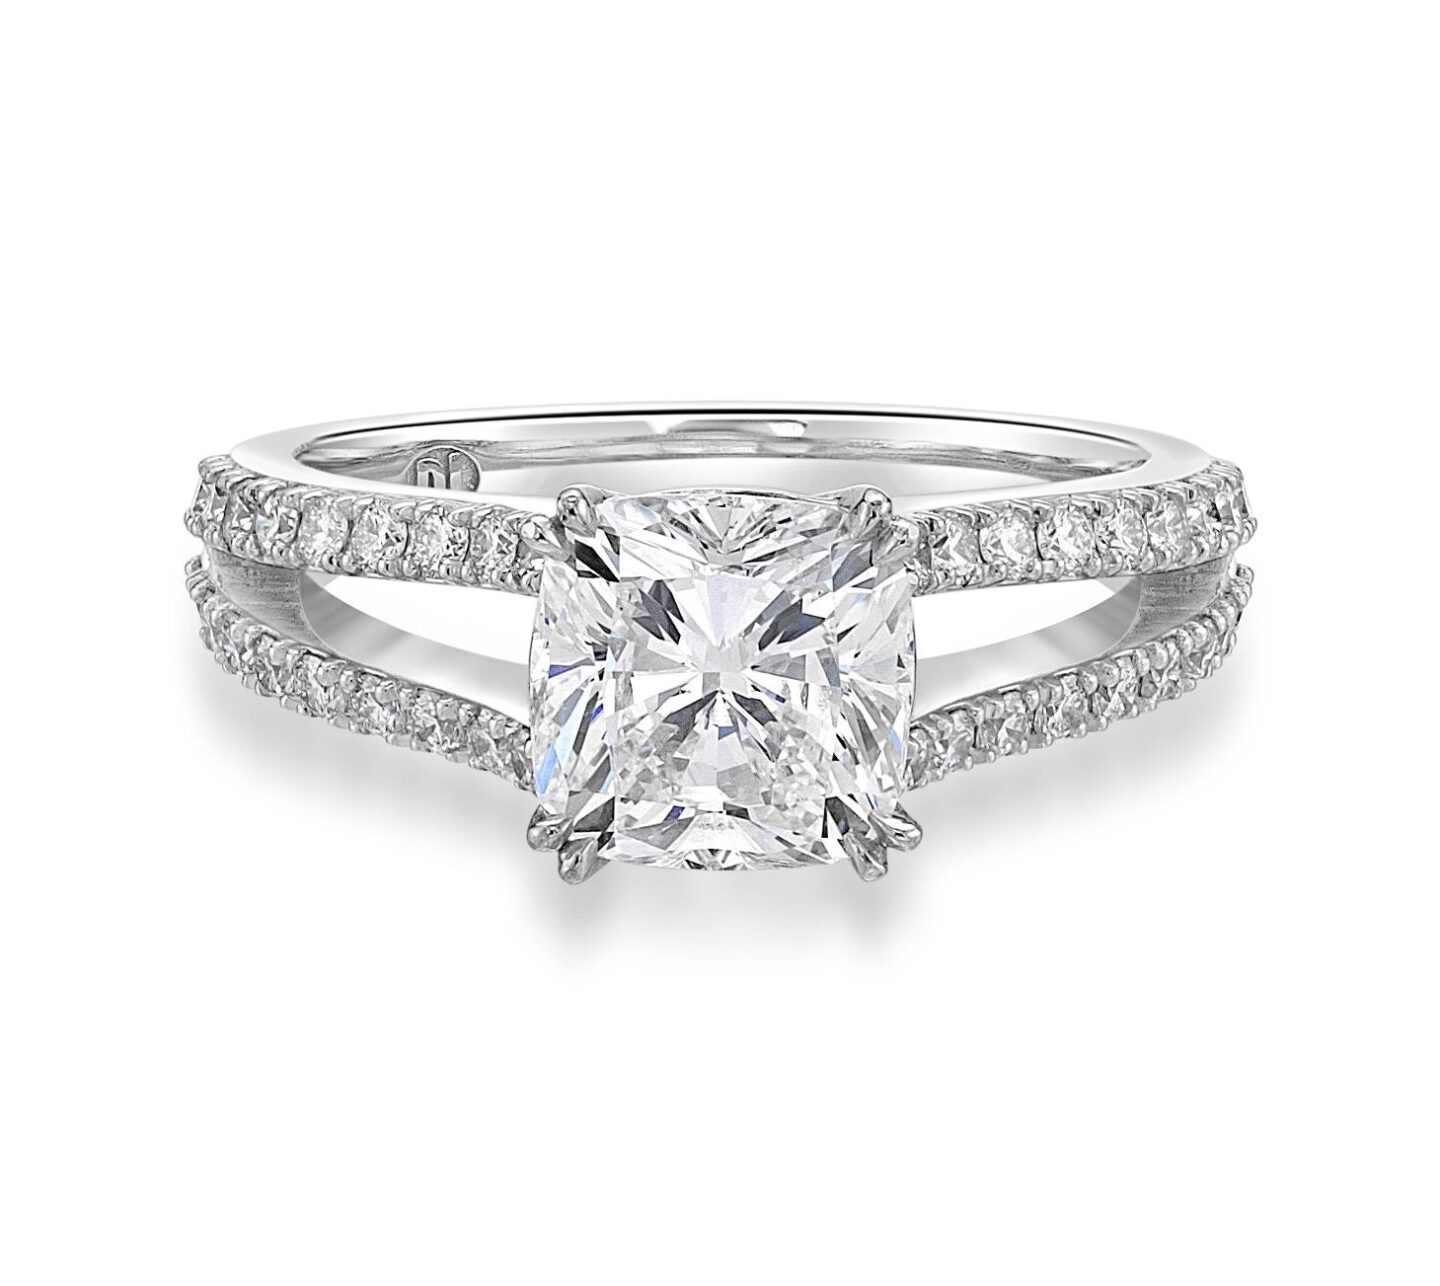 Ophelia – Cushion Cut Diamond Engagement Ring